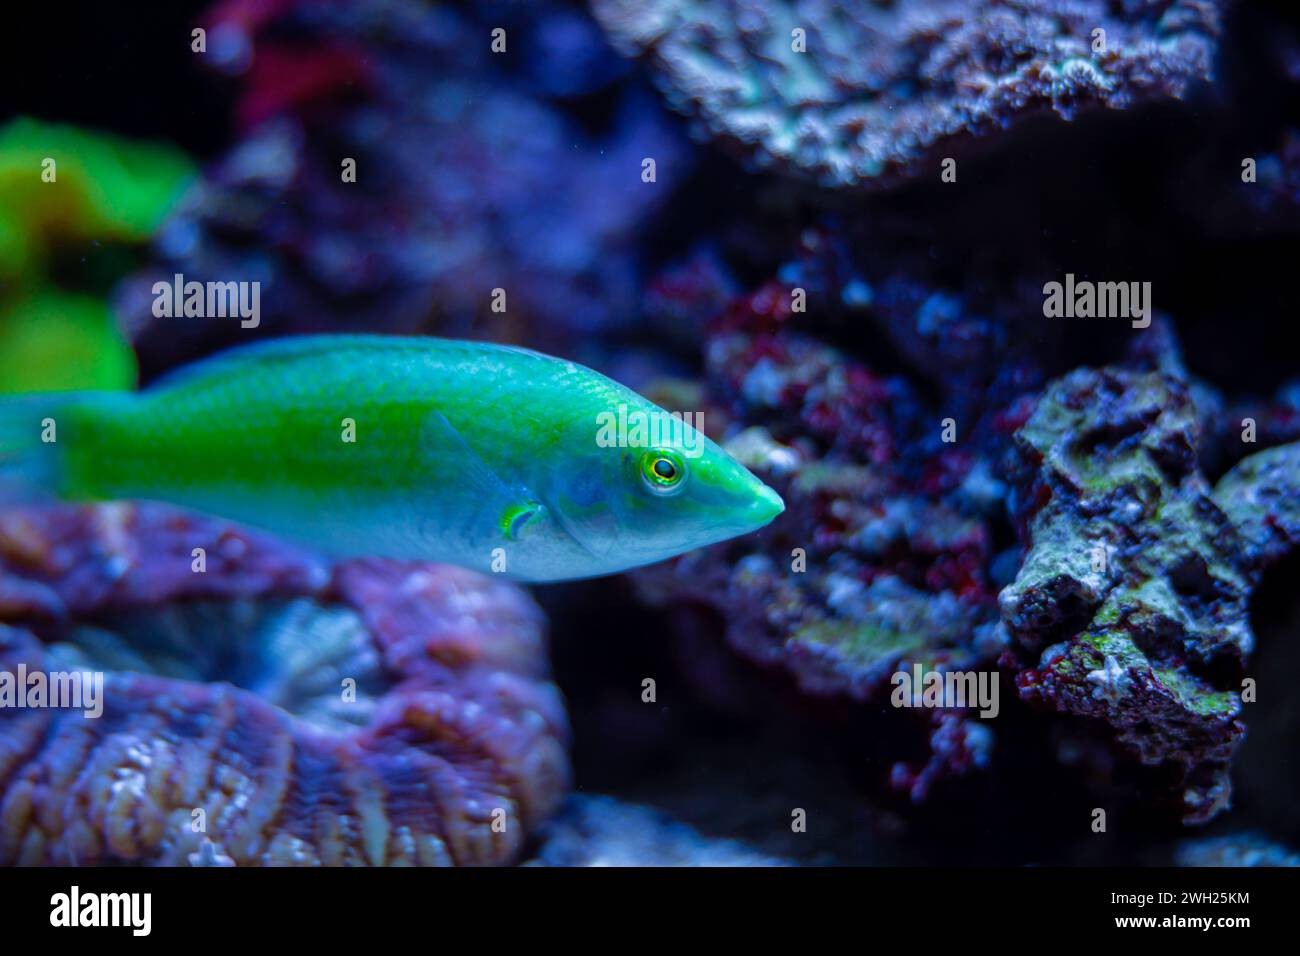 Halichoeres chloropterus green fish in an aquarium tank. Beautiful luminescent fish swimming in water. Corals and rocks around it. Stock Photo